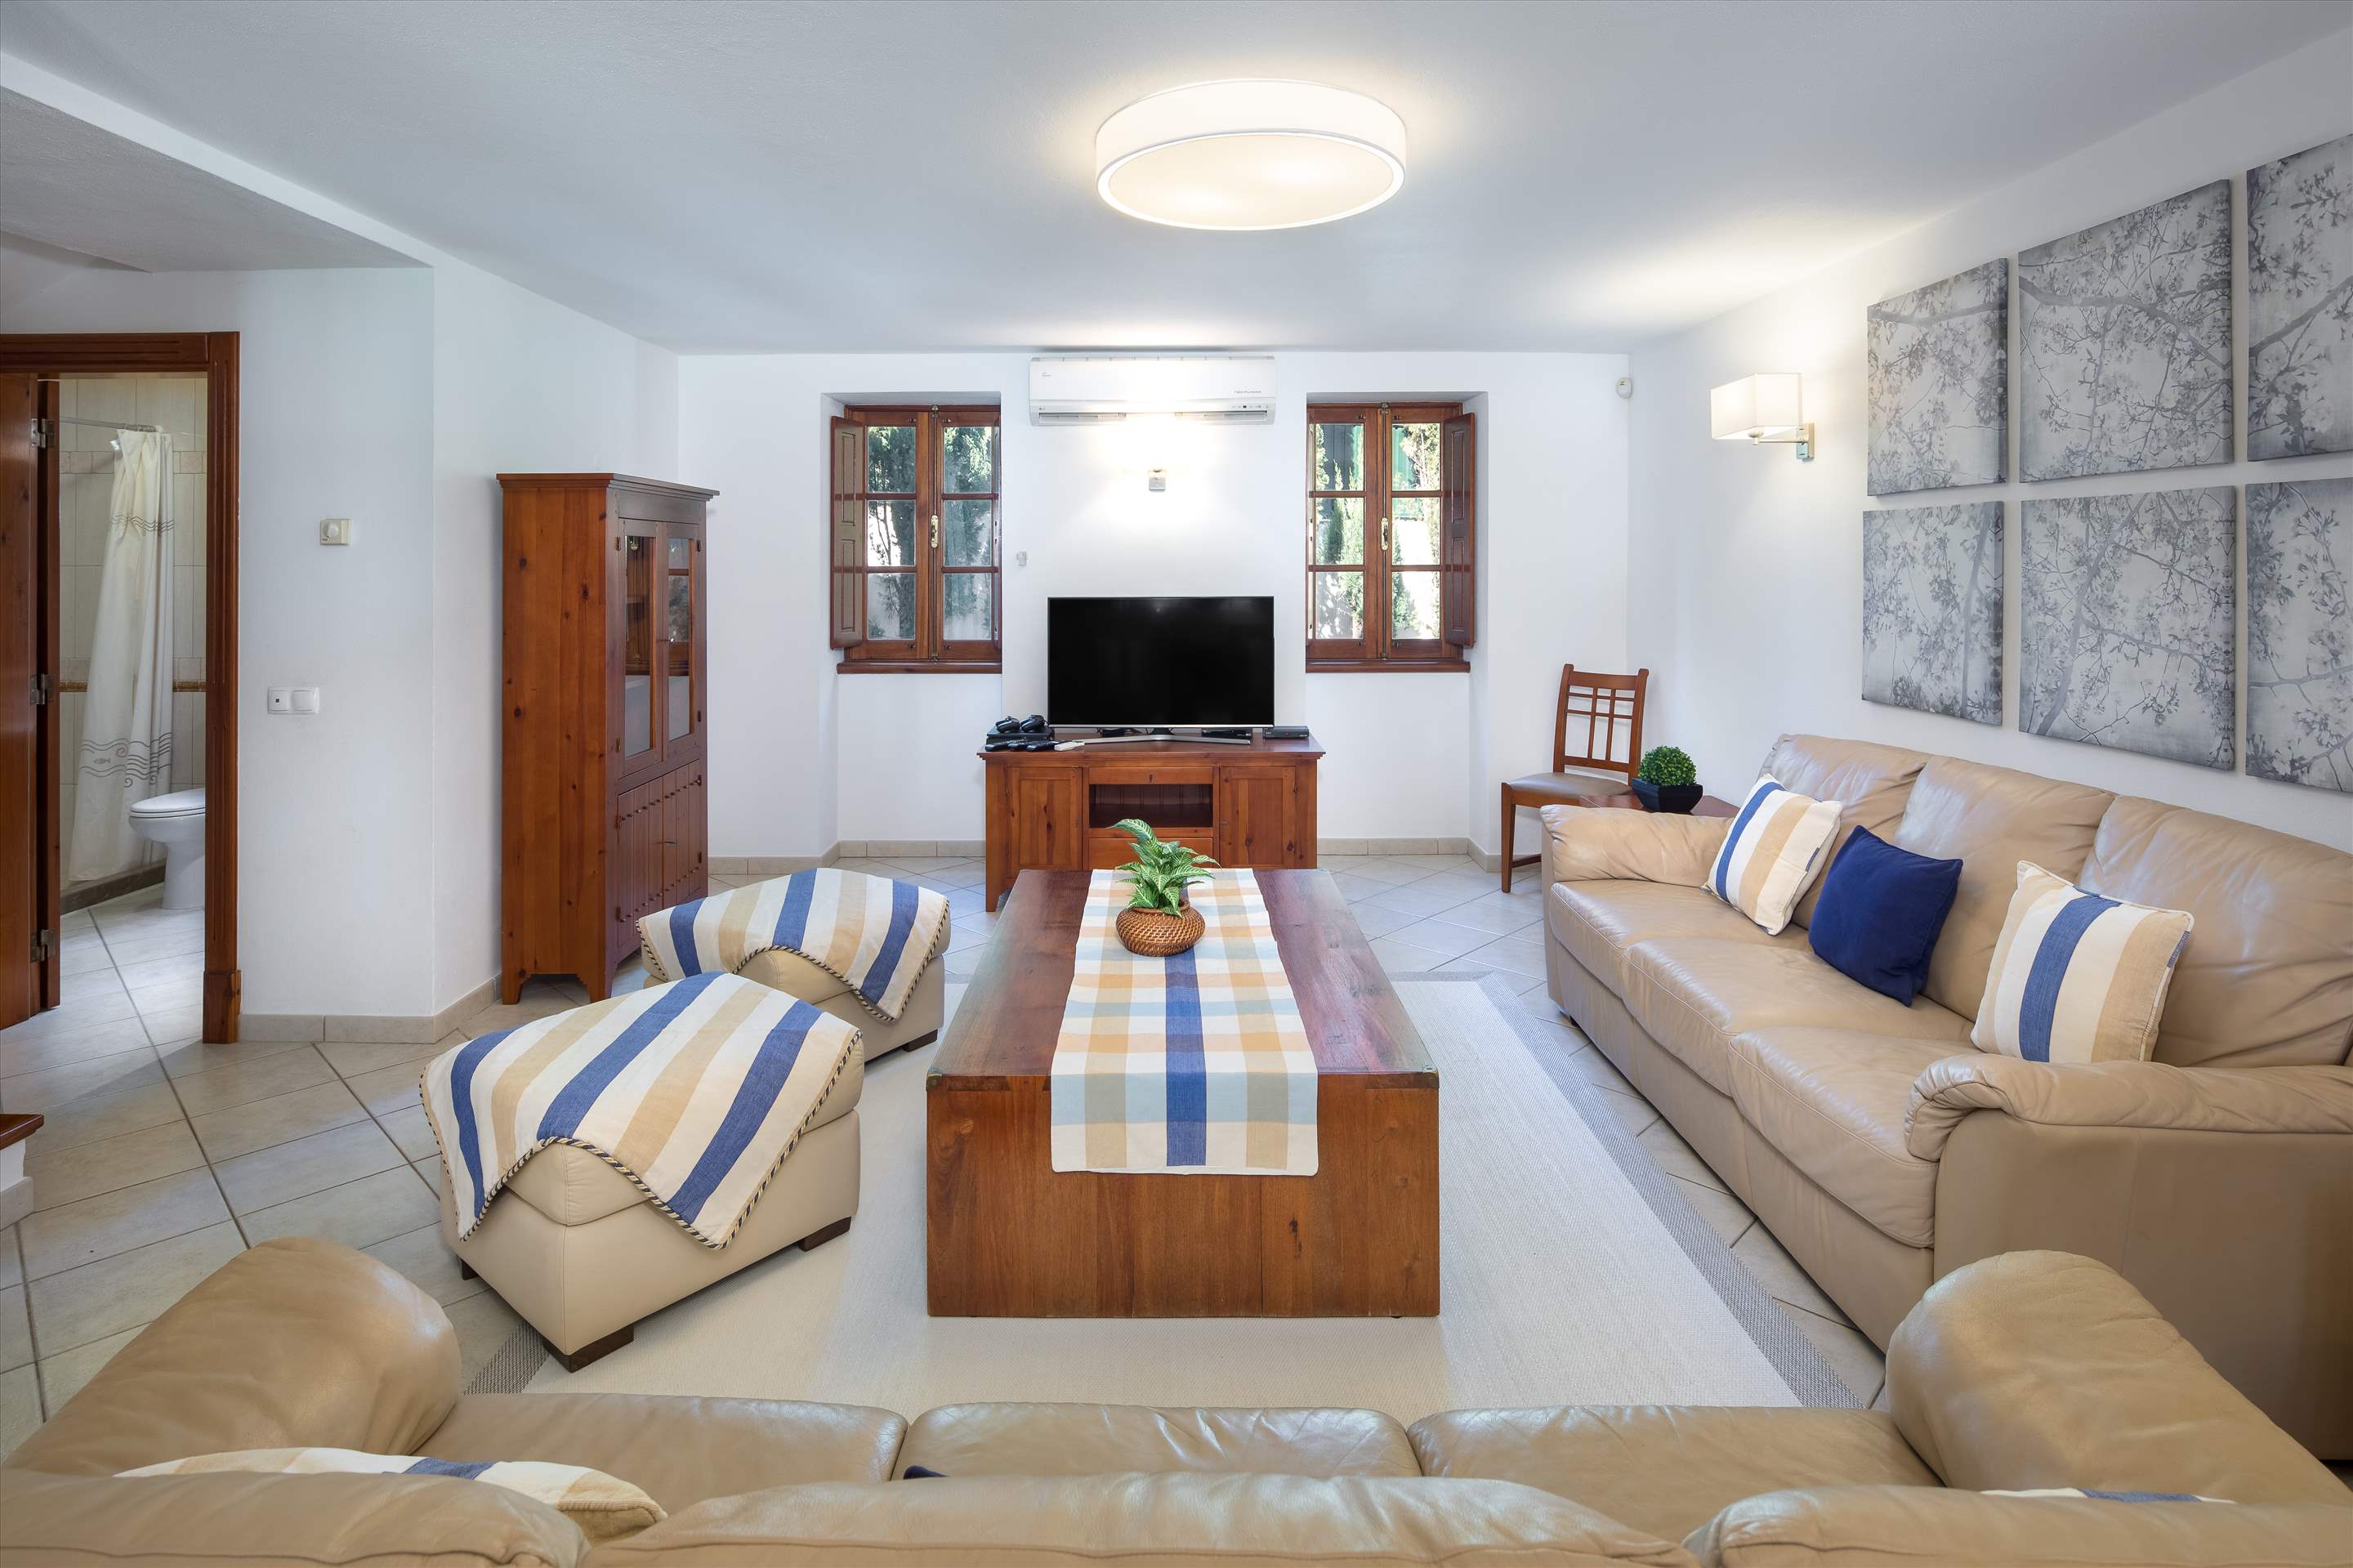 Casa do Ingles, up to 6 persons, 3 bedroom villa in Vilamoura Area, Algarve Photo #4